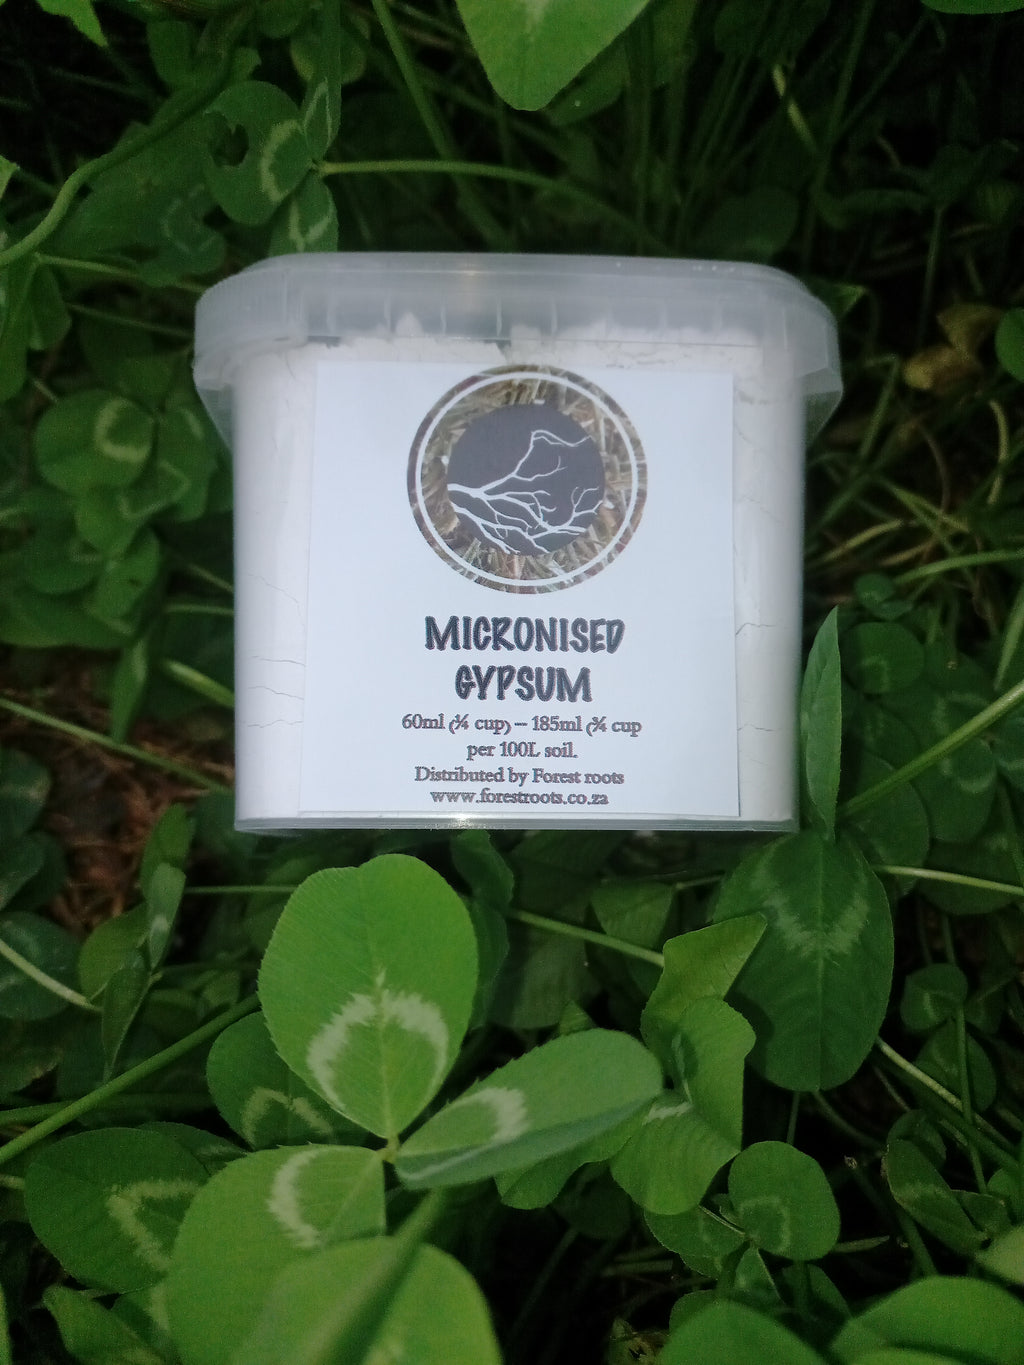 Micronised Gypsum